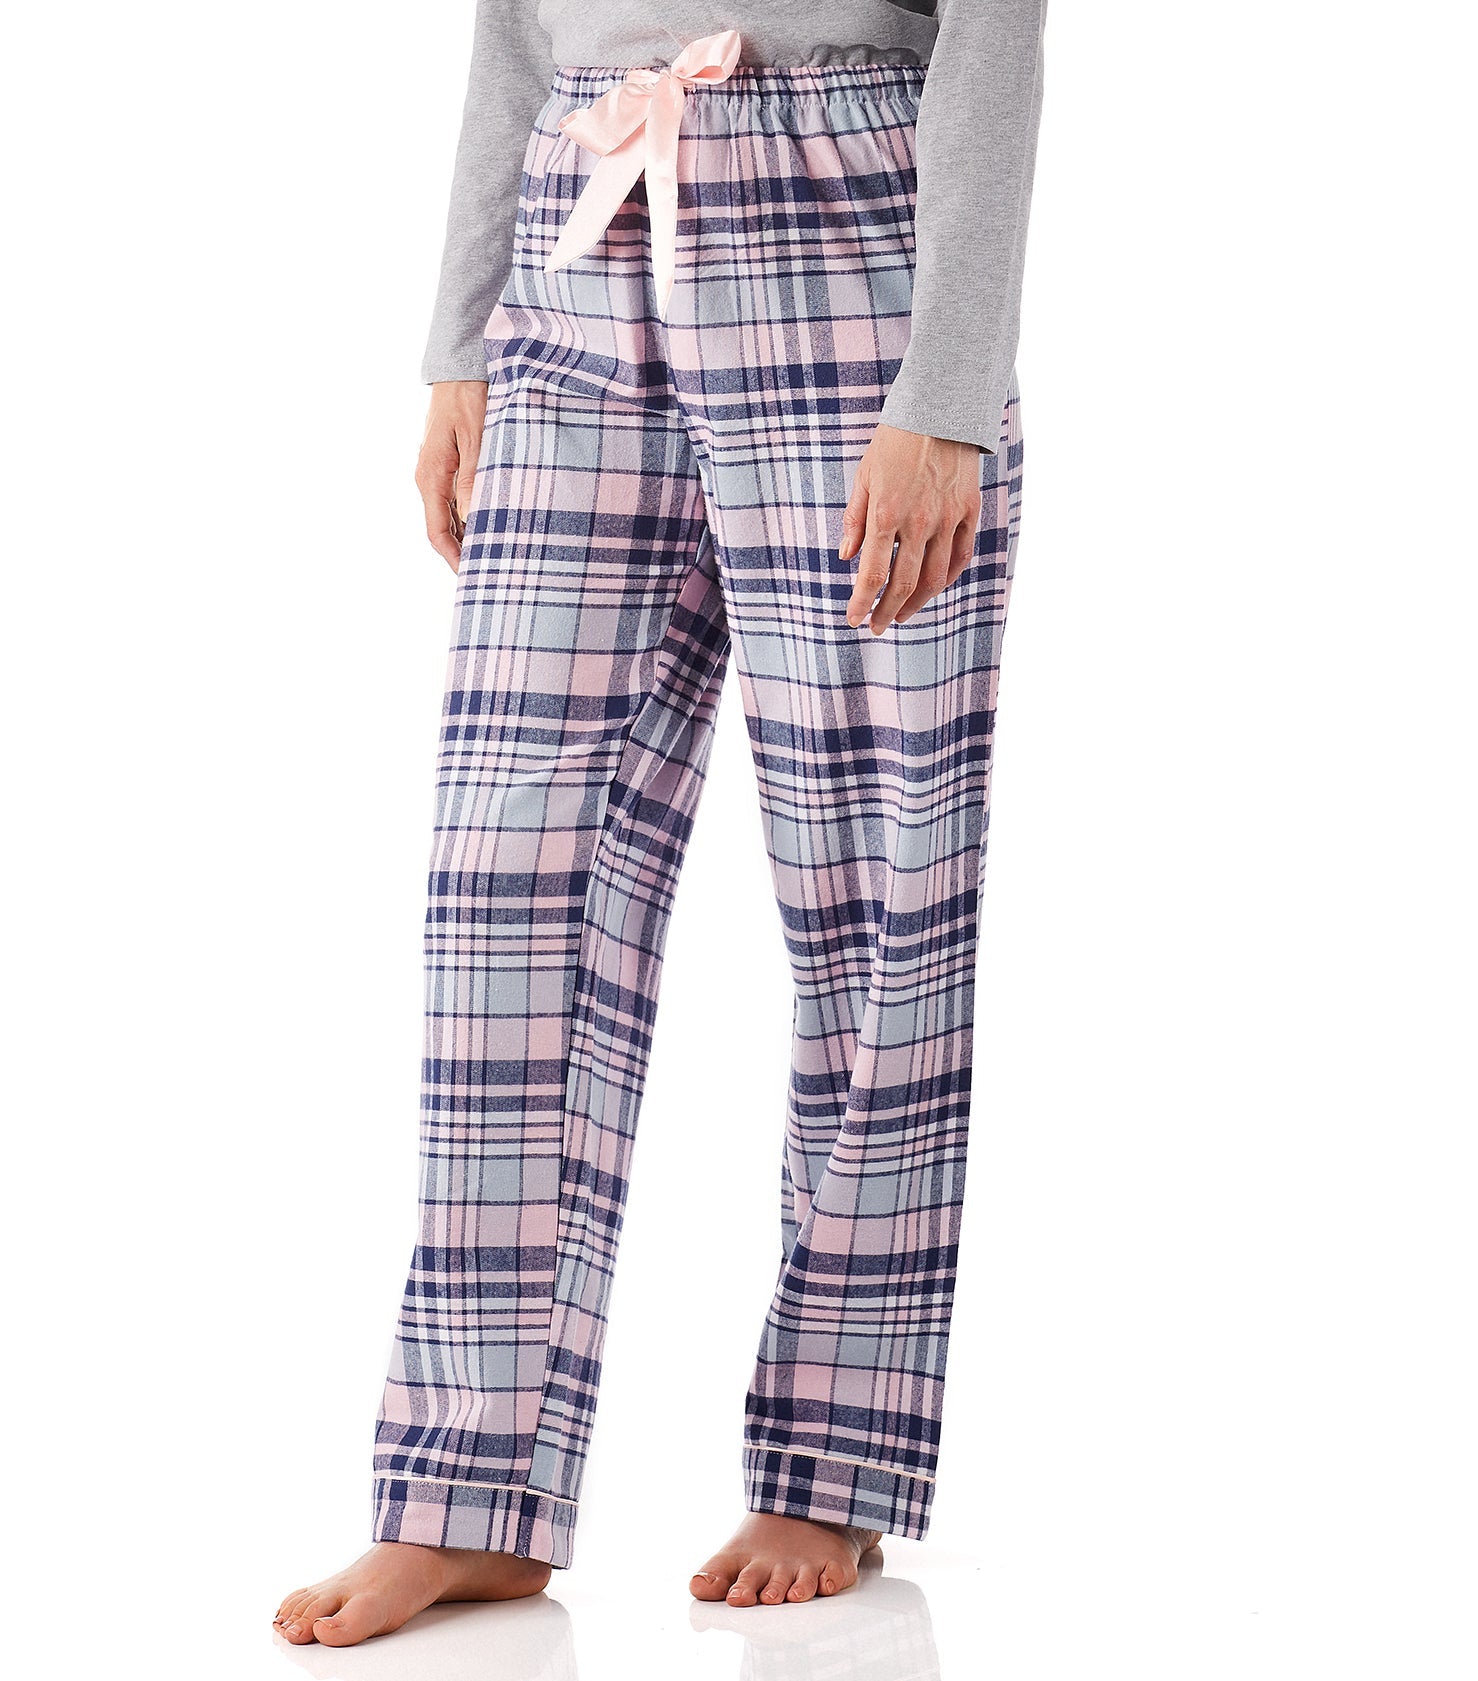 Women’s winter pyjama pants Australia | Isabella Check Flannelette Cotton Pyjama Pants | Magnolia Lounge Australia